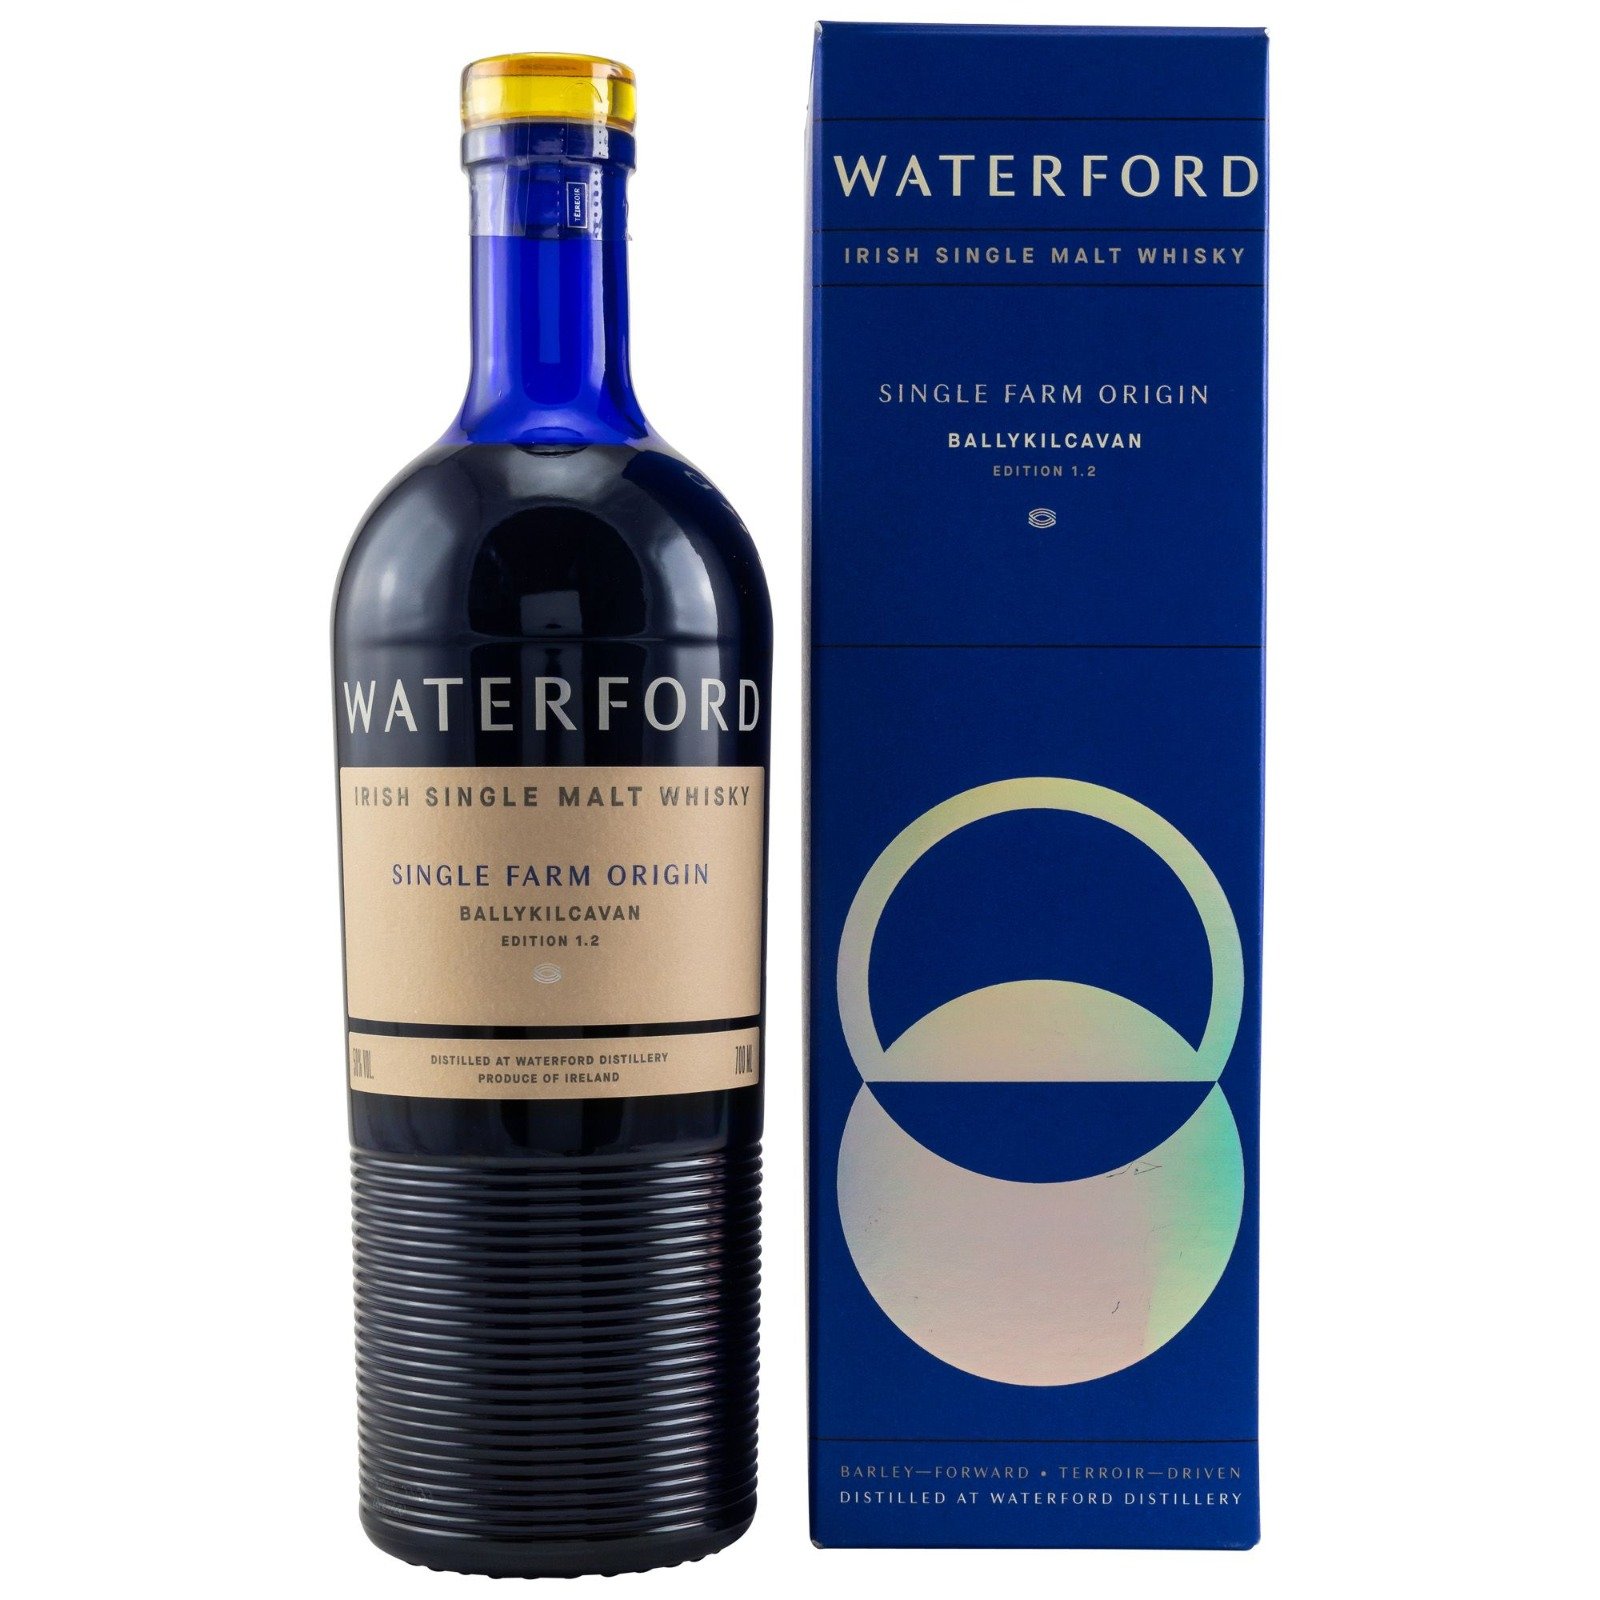 Waterford Single Farm Origins Ballykilcavan Edition 1.2 Irish Single Malt Whisky